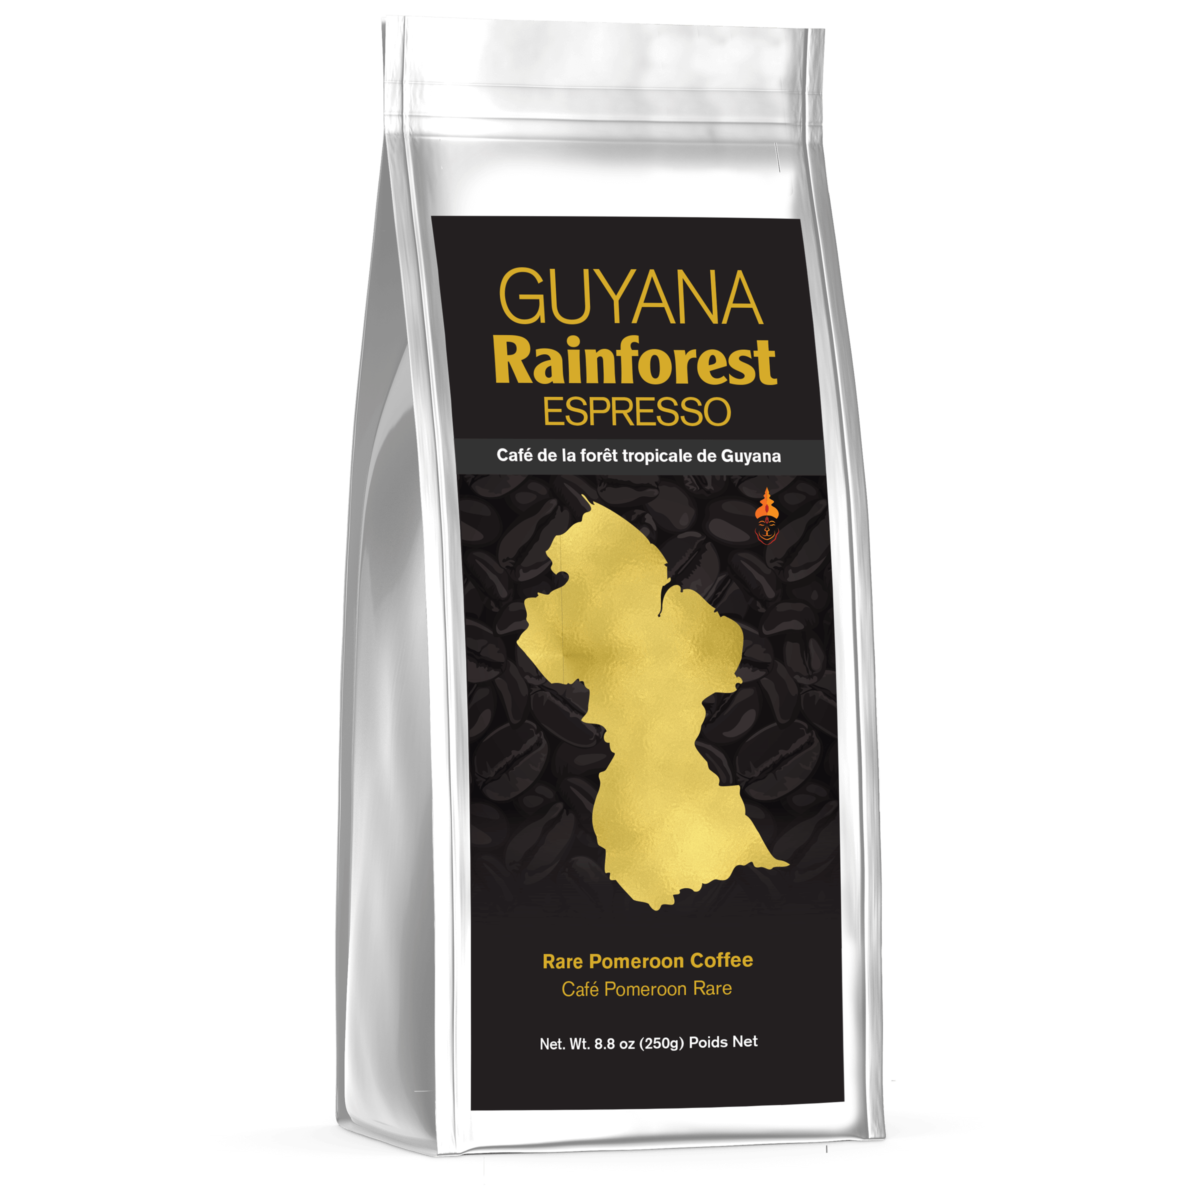 Guyana Rainforest Espresso